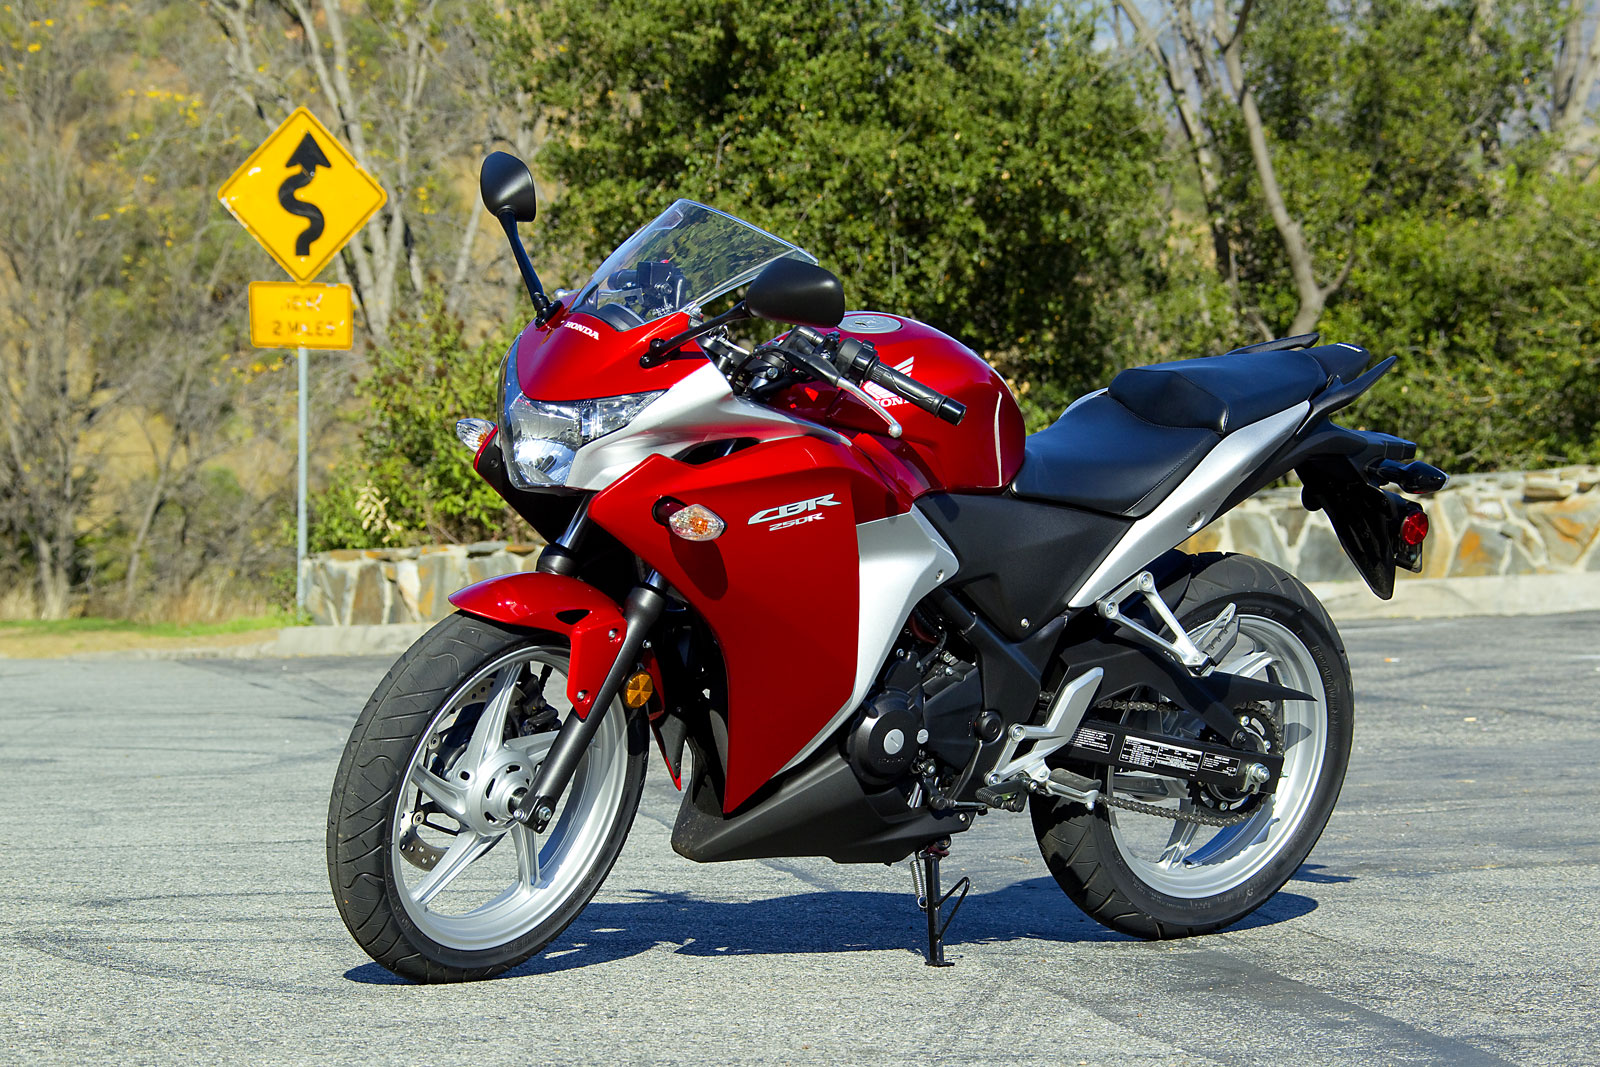 Мотоцикл honda cbr 250 и его характеристики